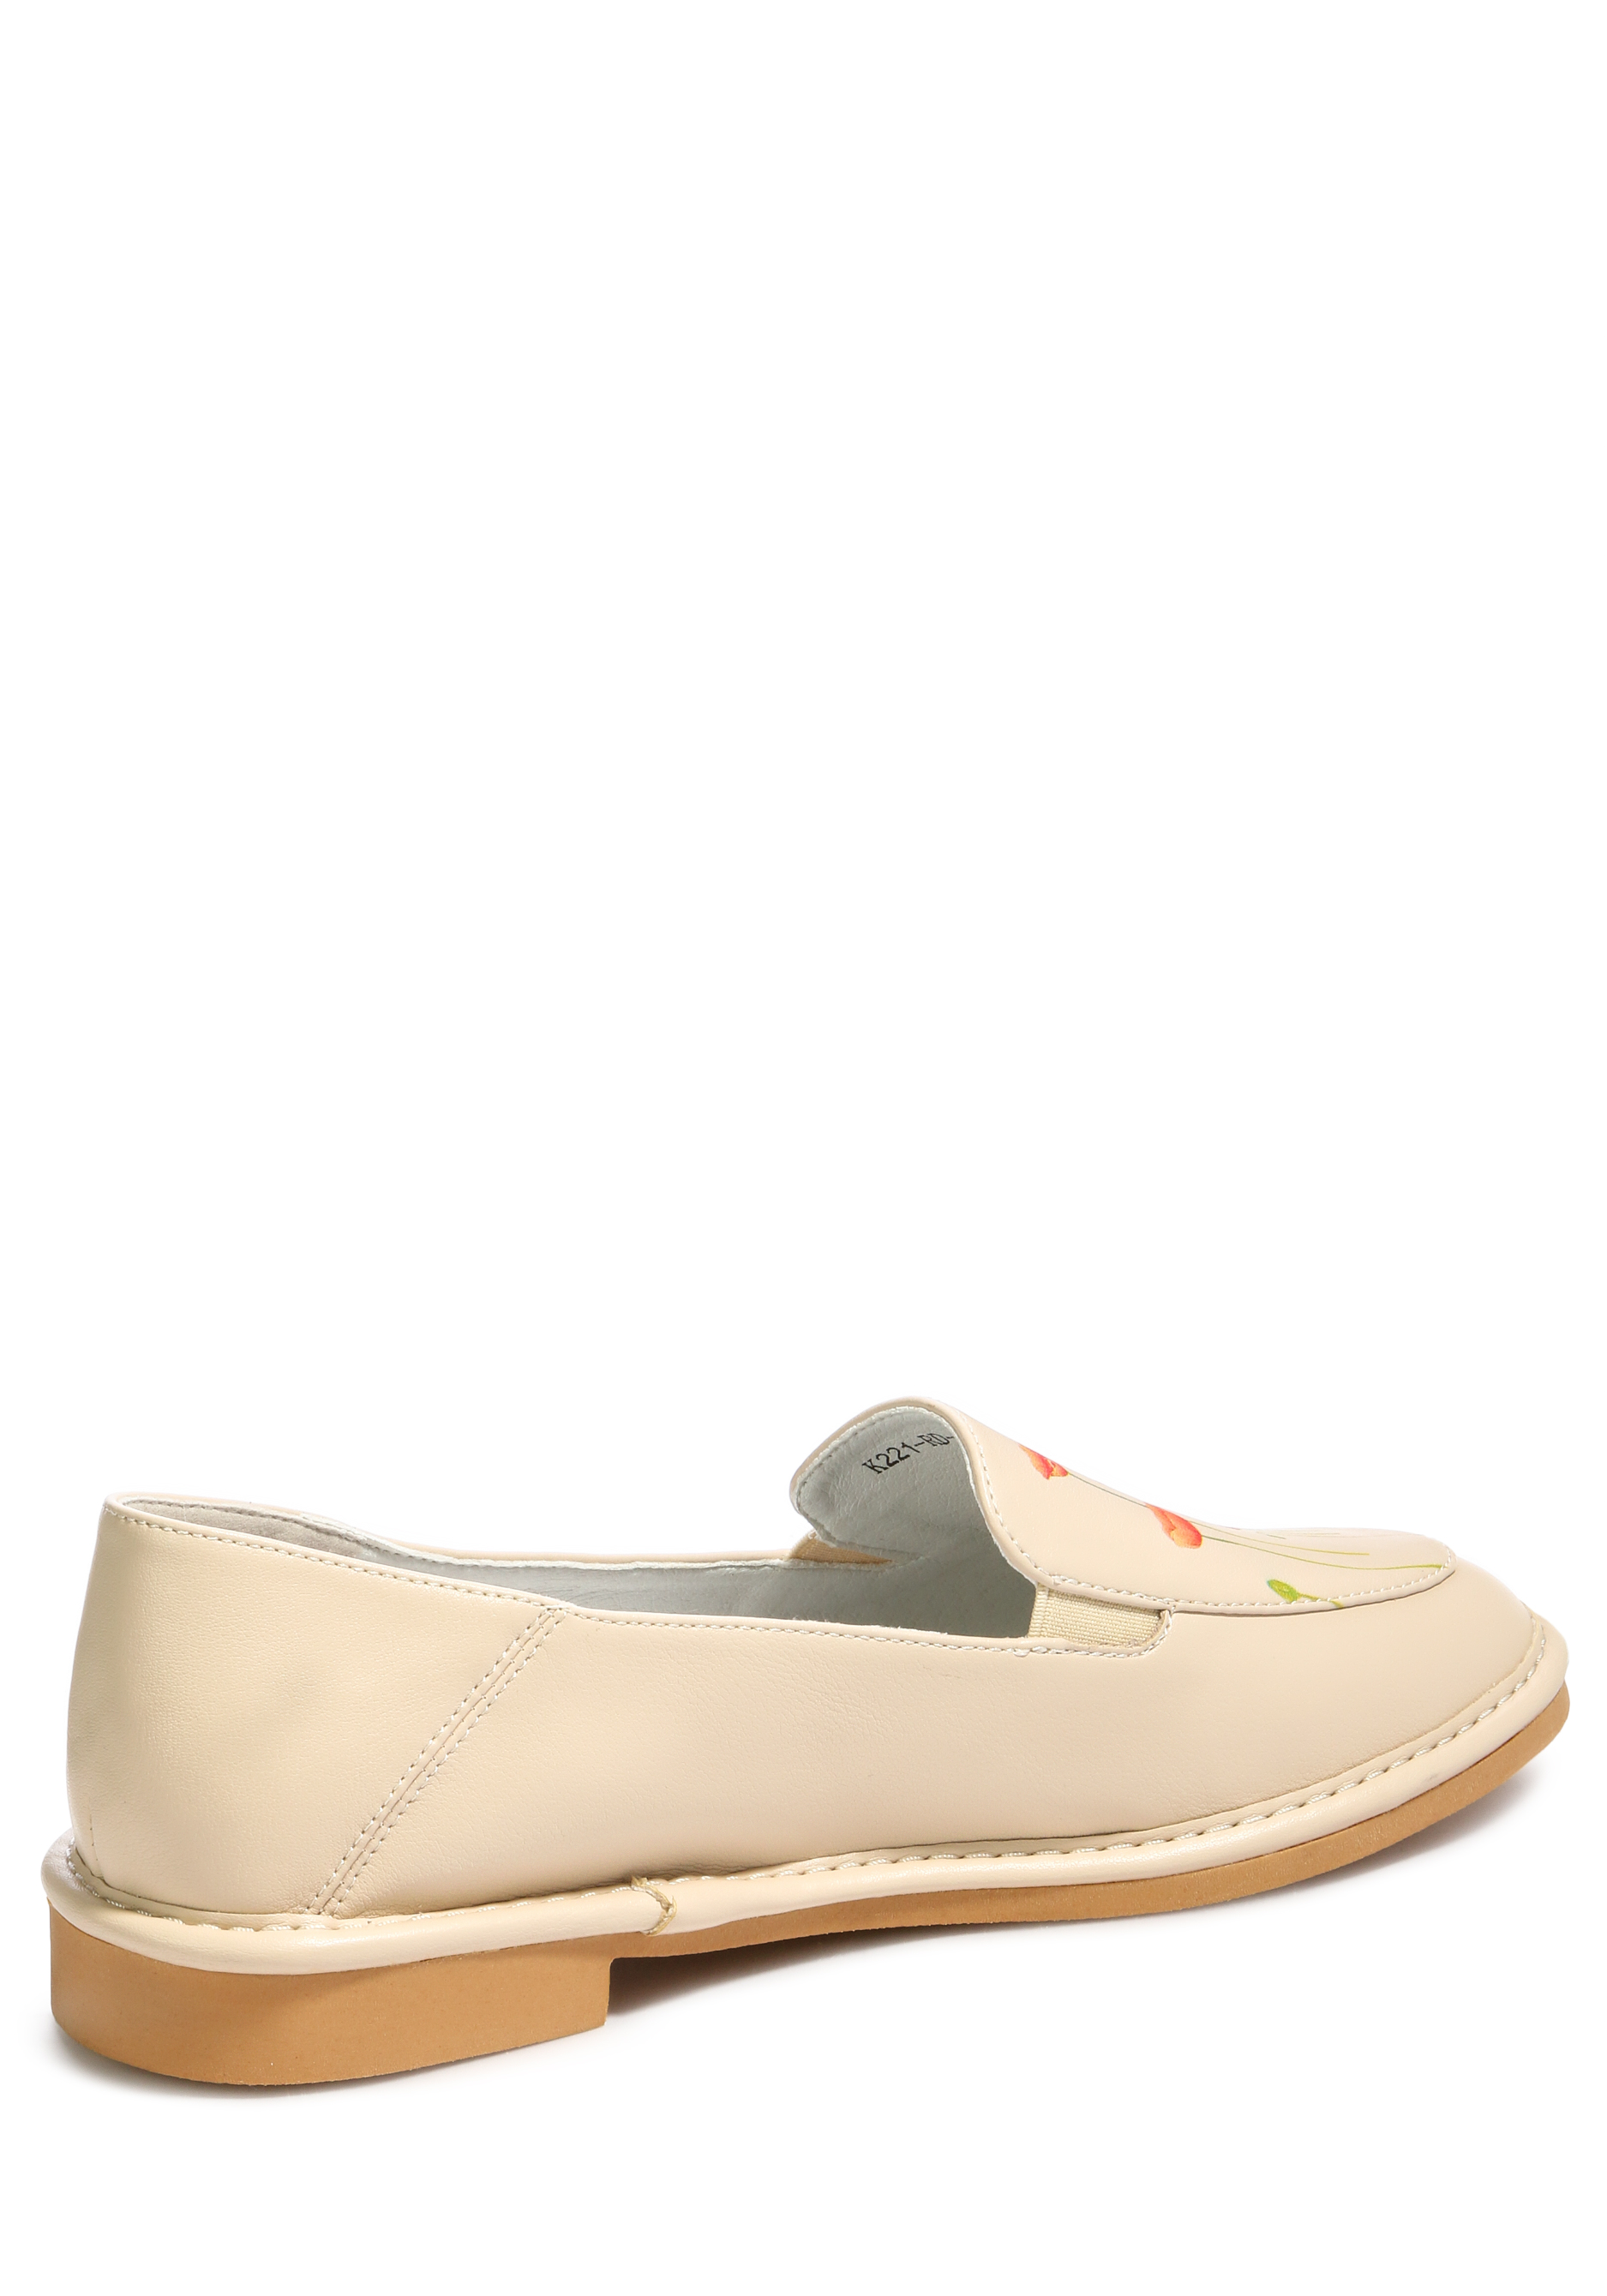 Туфли женские "Лили" KUMFO, цвет бежевый, размер 39 - фото 8